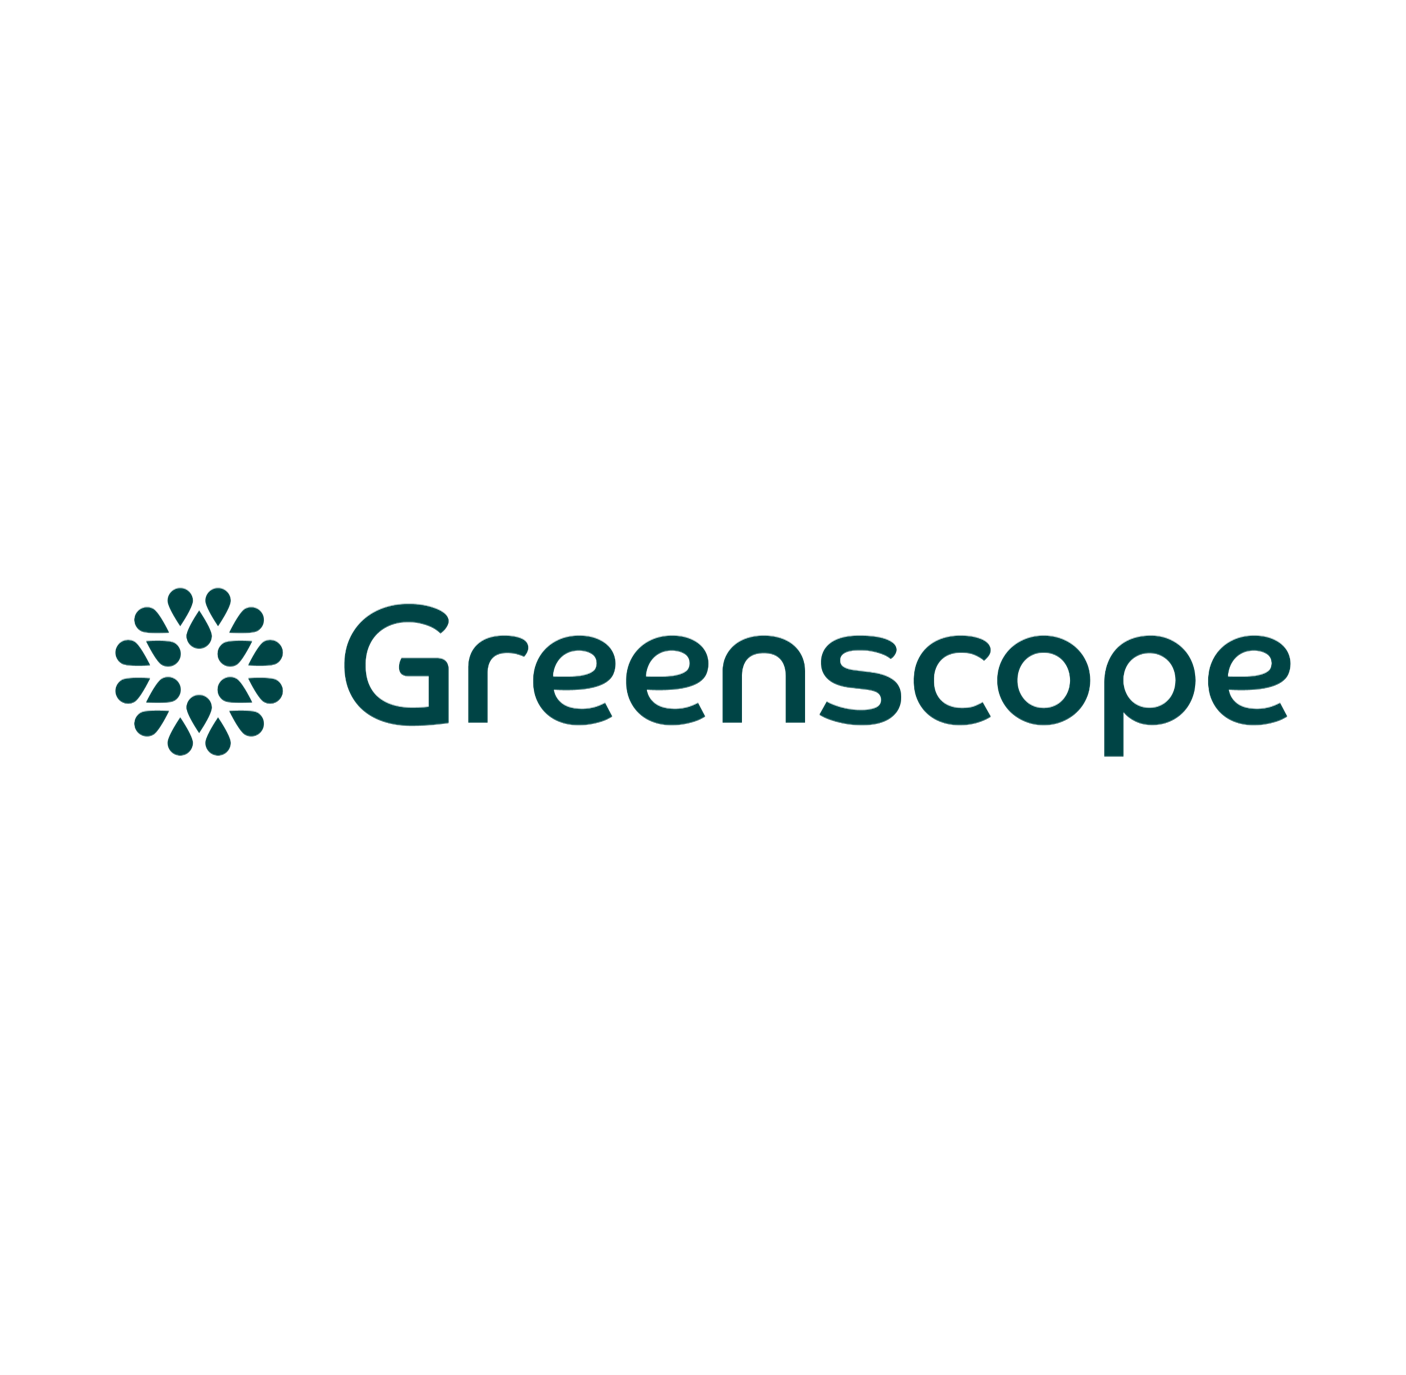 Greenscope